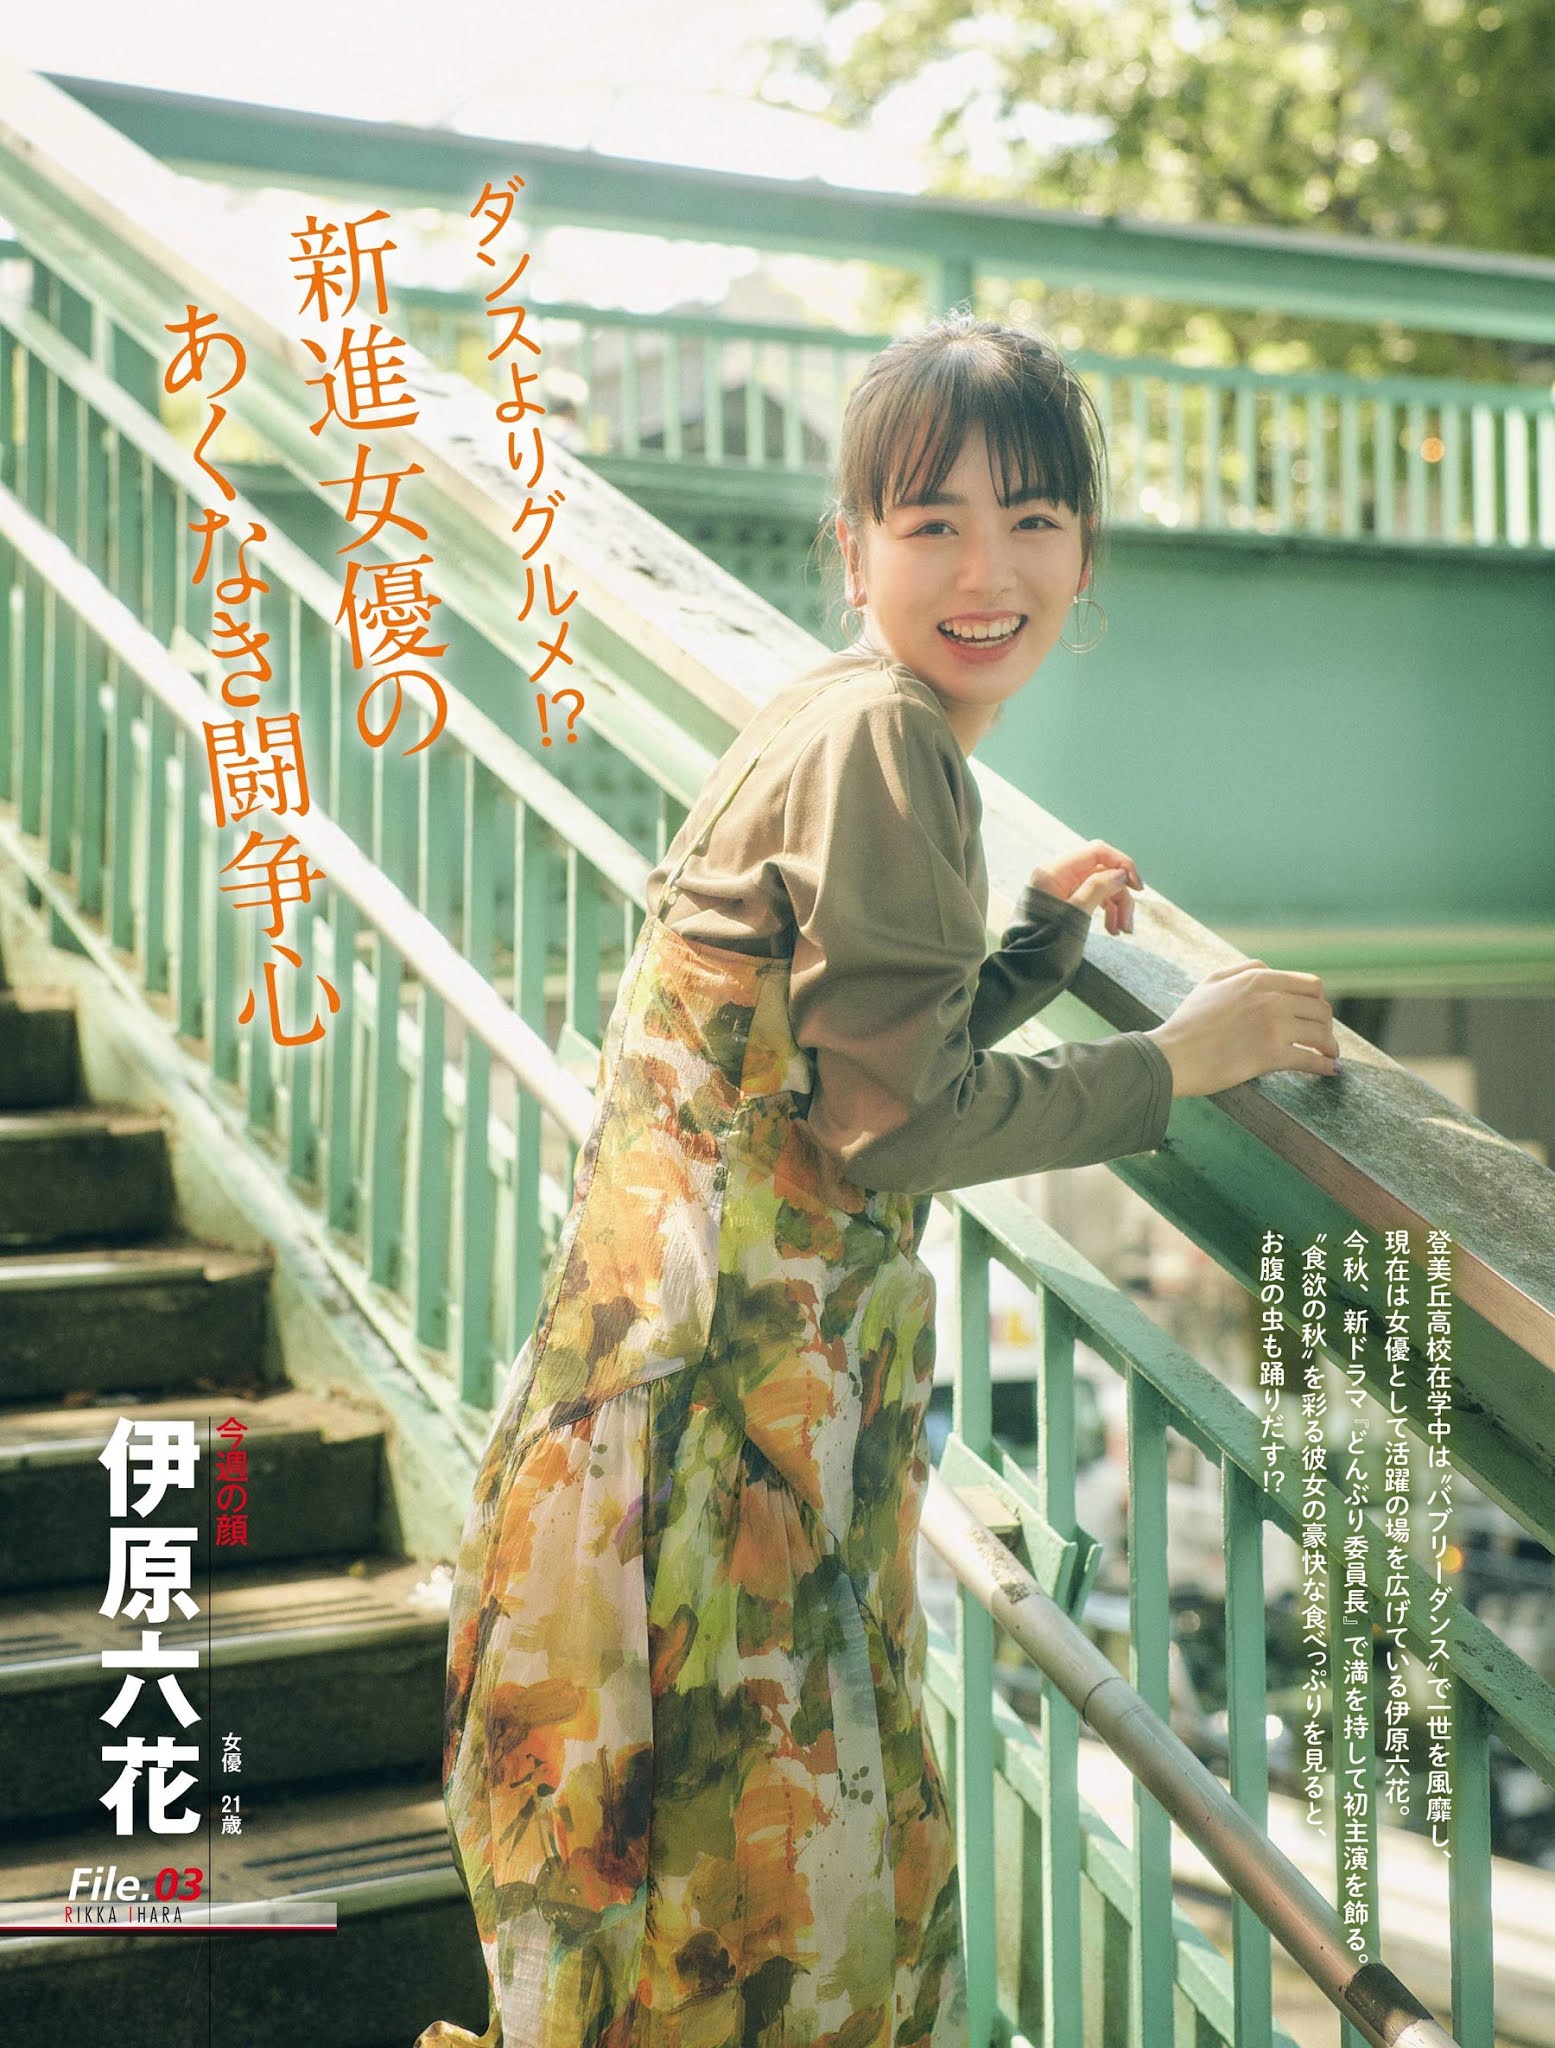 Japan Magazine Fashion Weekly Spa 10 13 今週の顔 伊原六花 Ihara Rikka Photo